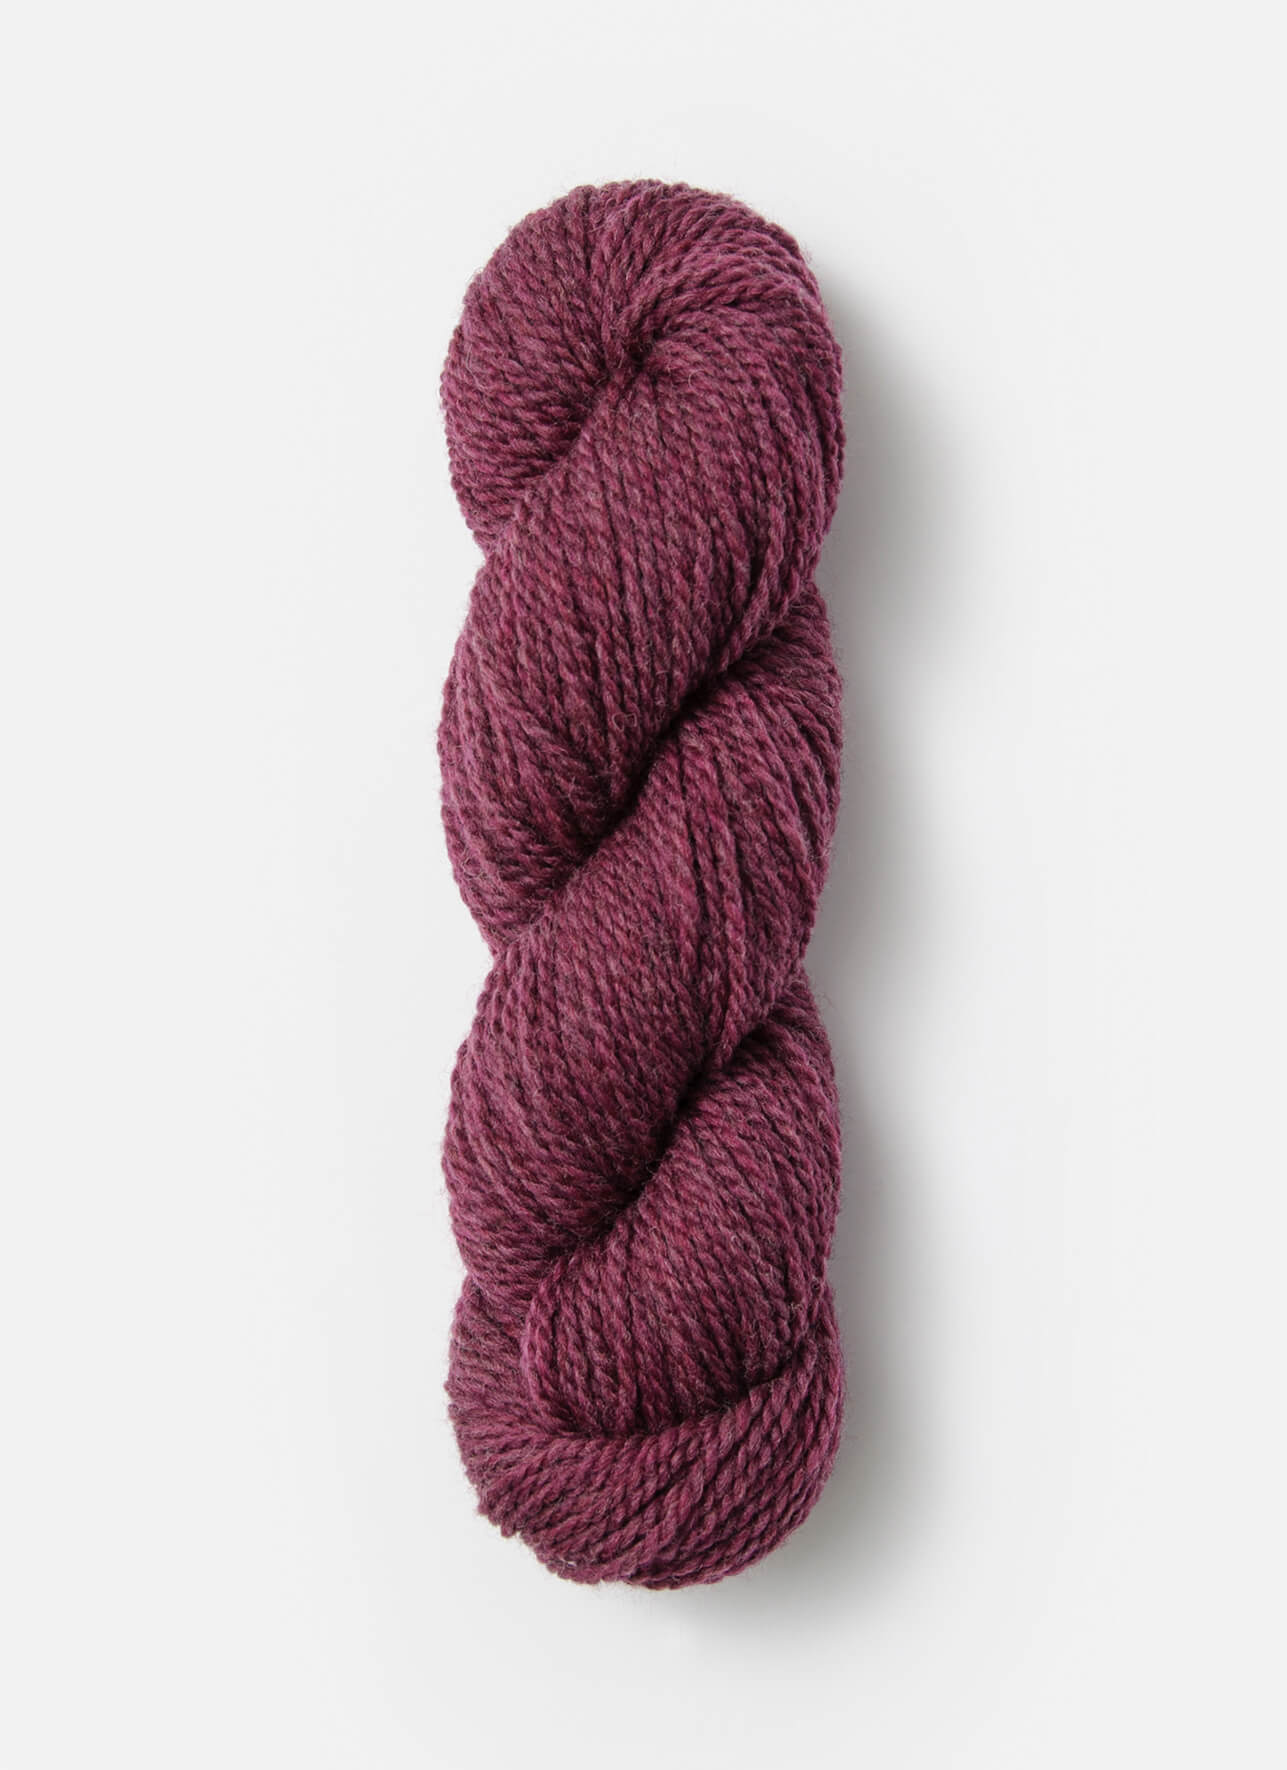  Acrylic Yarn, 1312 Yards, Large 50g Skeins